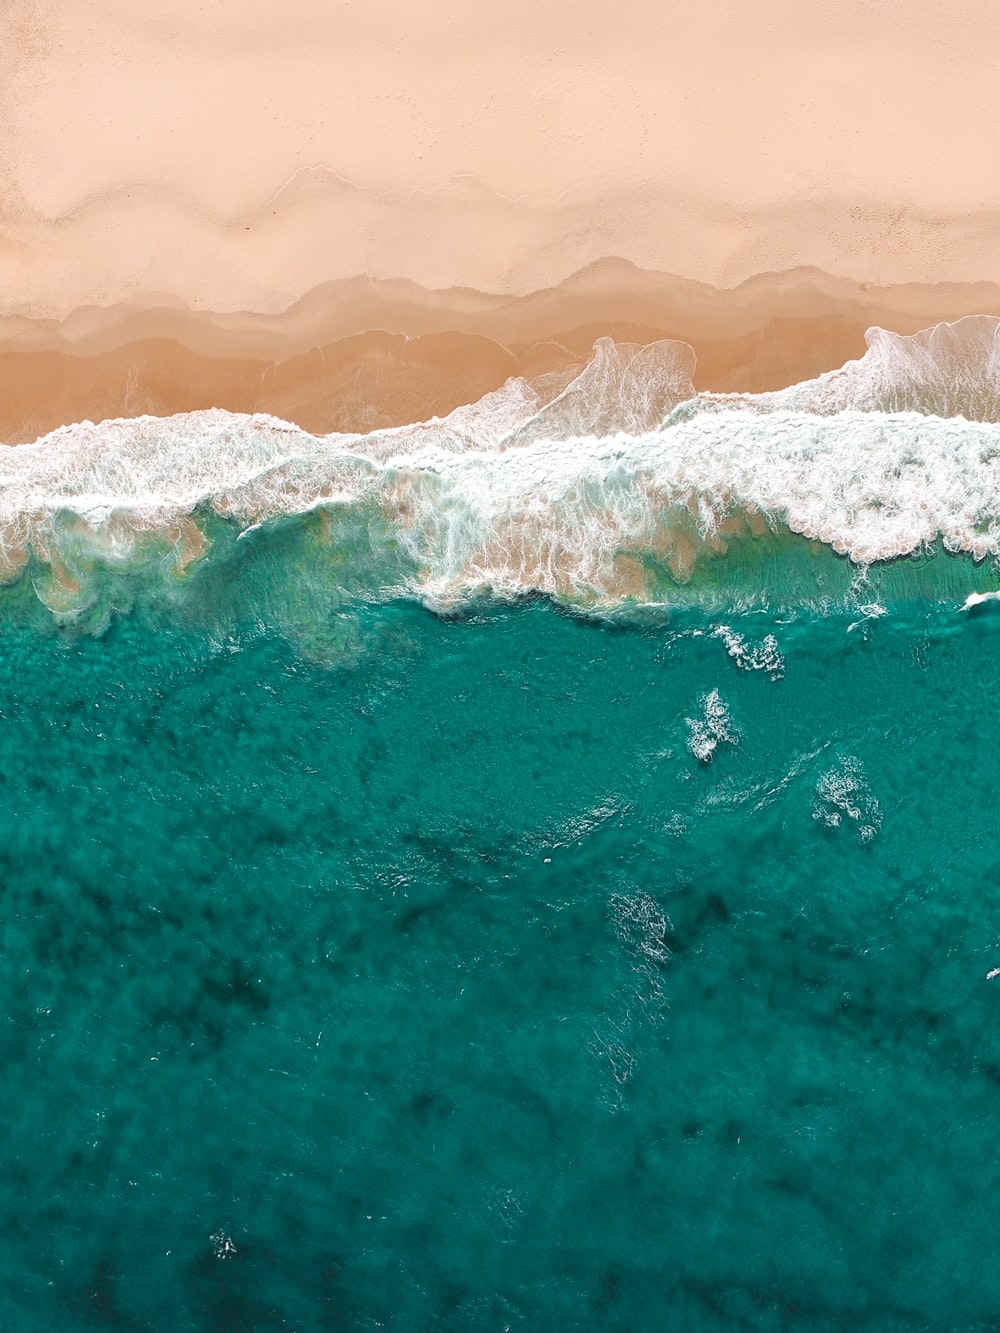 iPhone Wallpaper Photo Ocean Image